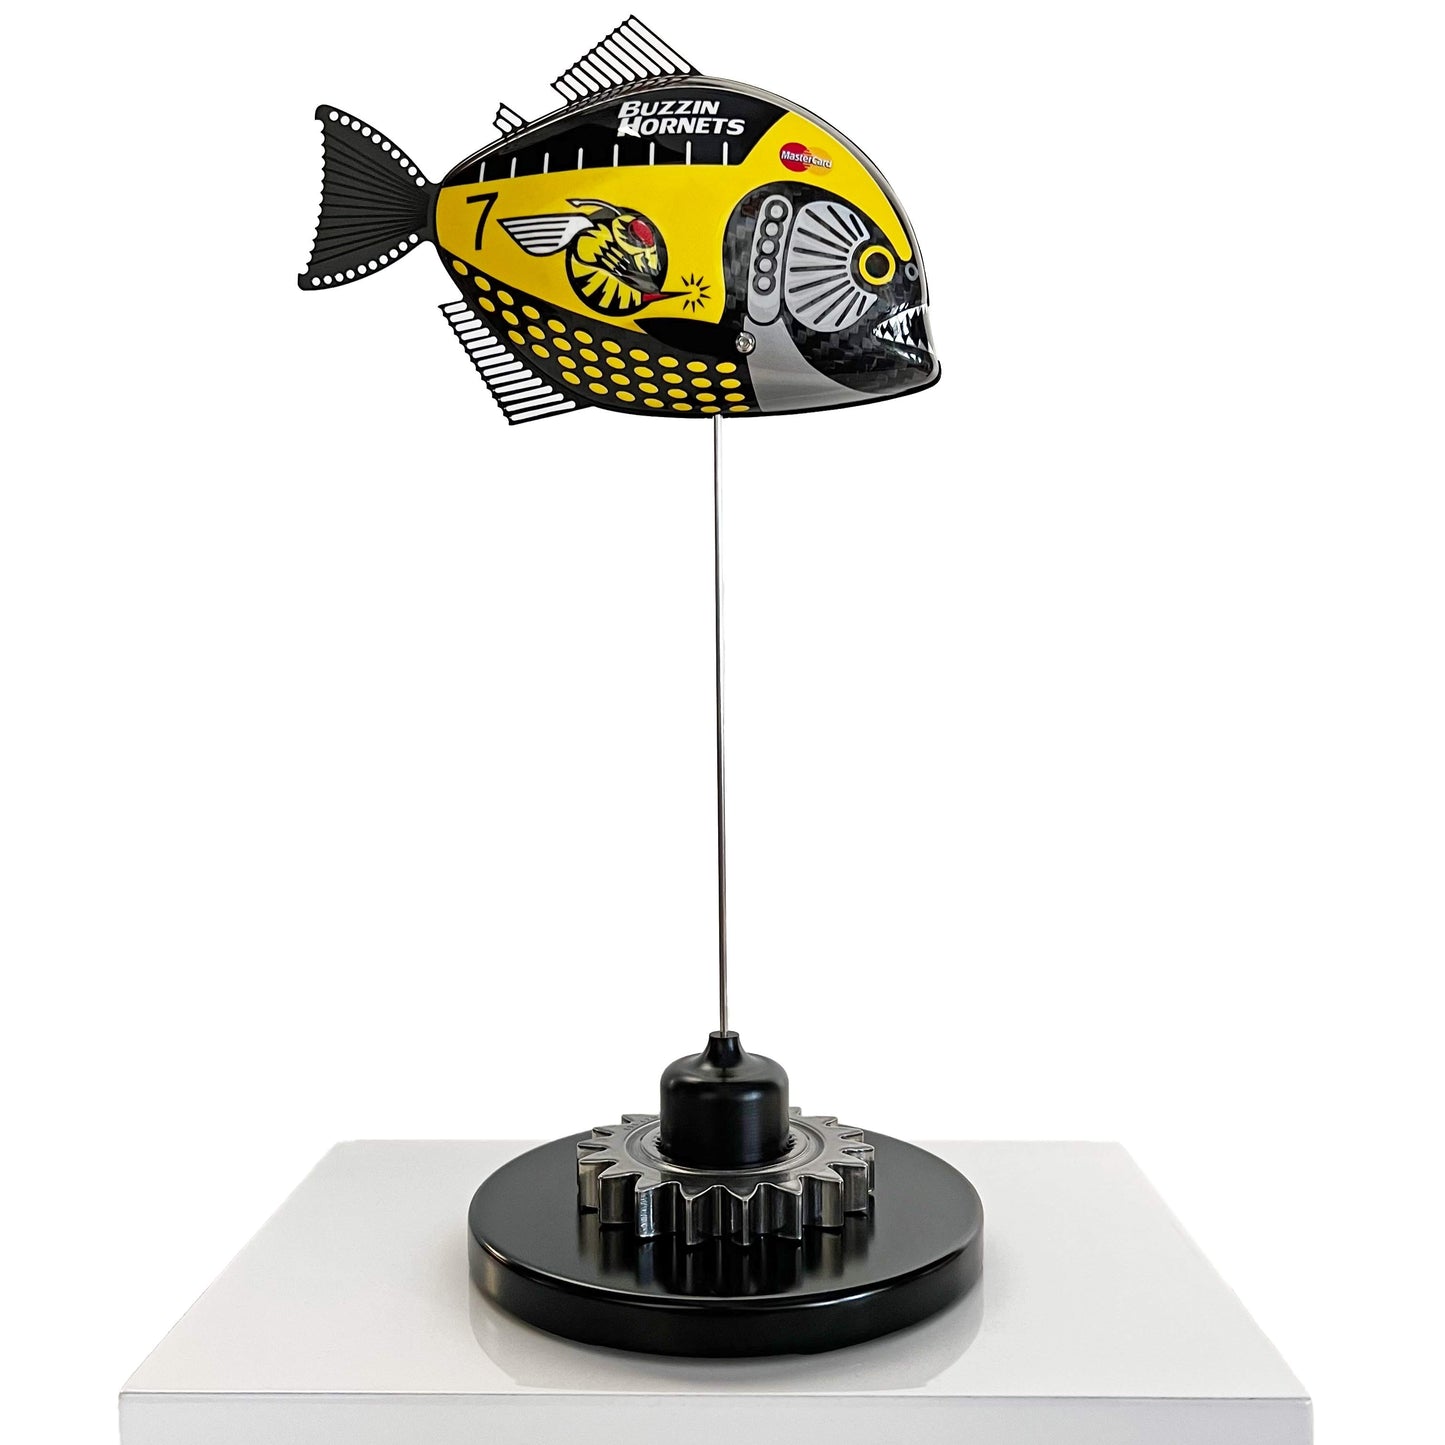 Carbon fibre piranha sculpture with Jordan "Buzzin Hornets" livery on a black base with F1 gear